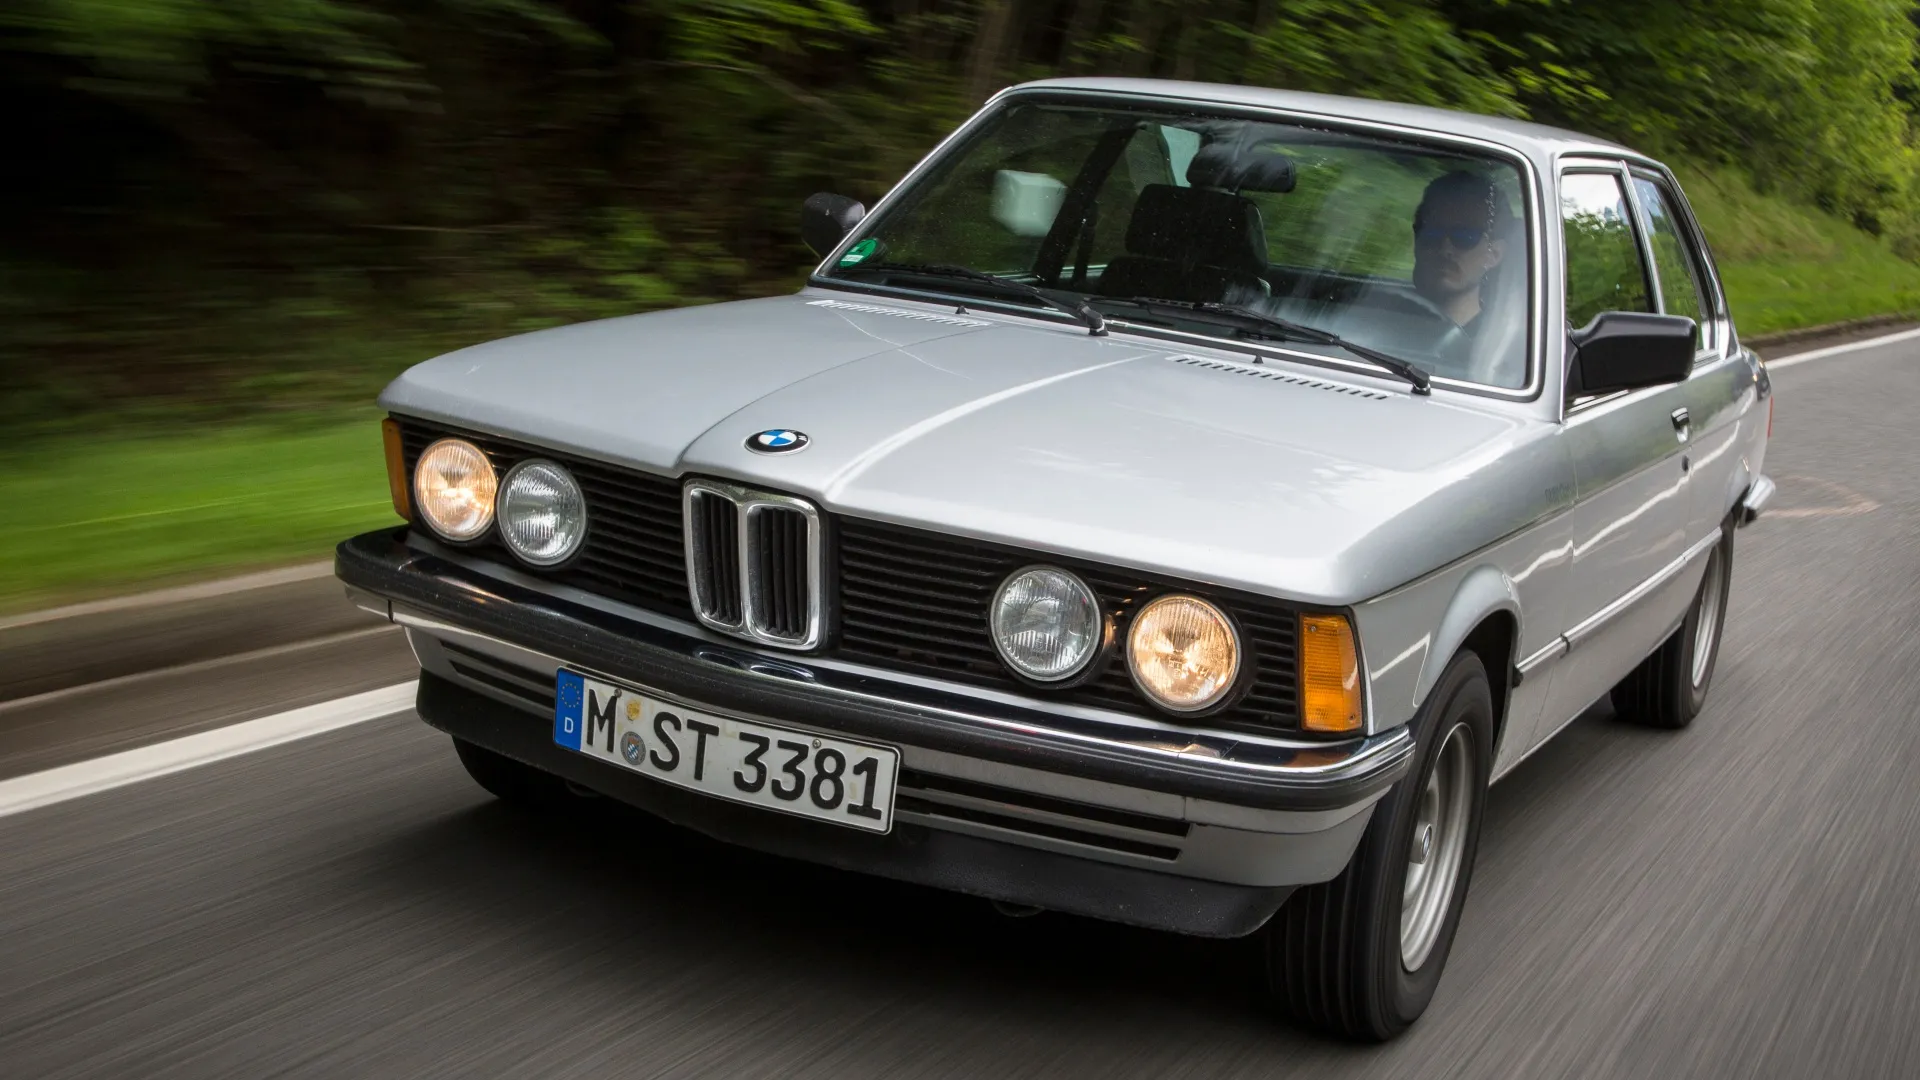 Coche del día: BMW 323i (e21)